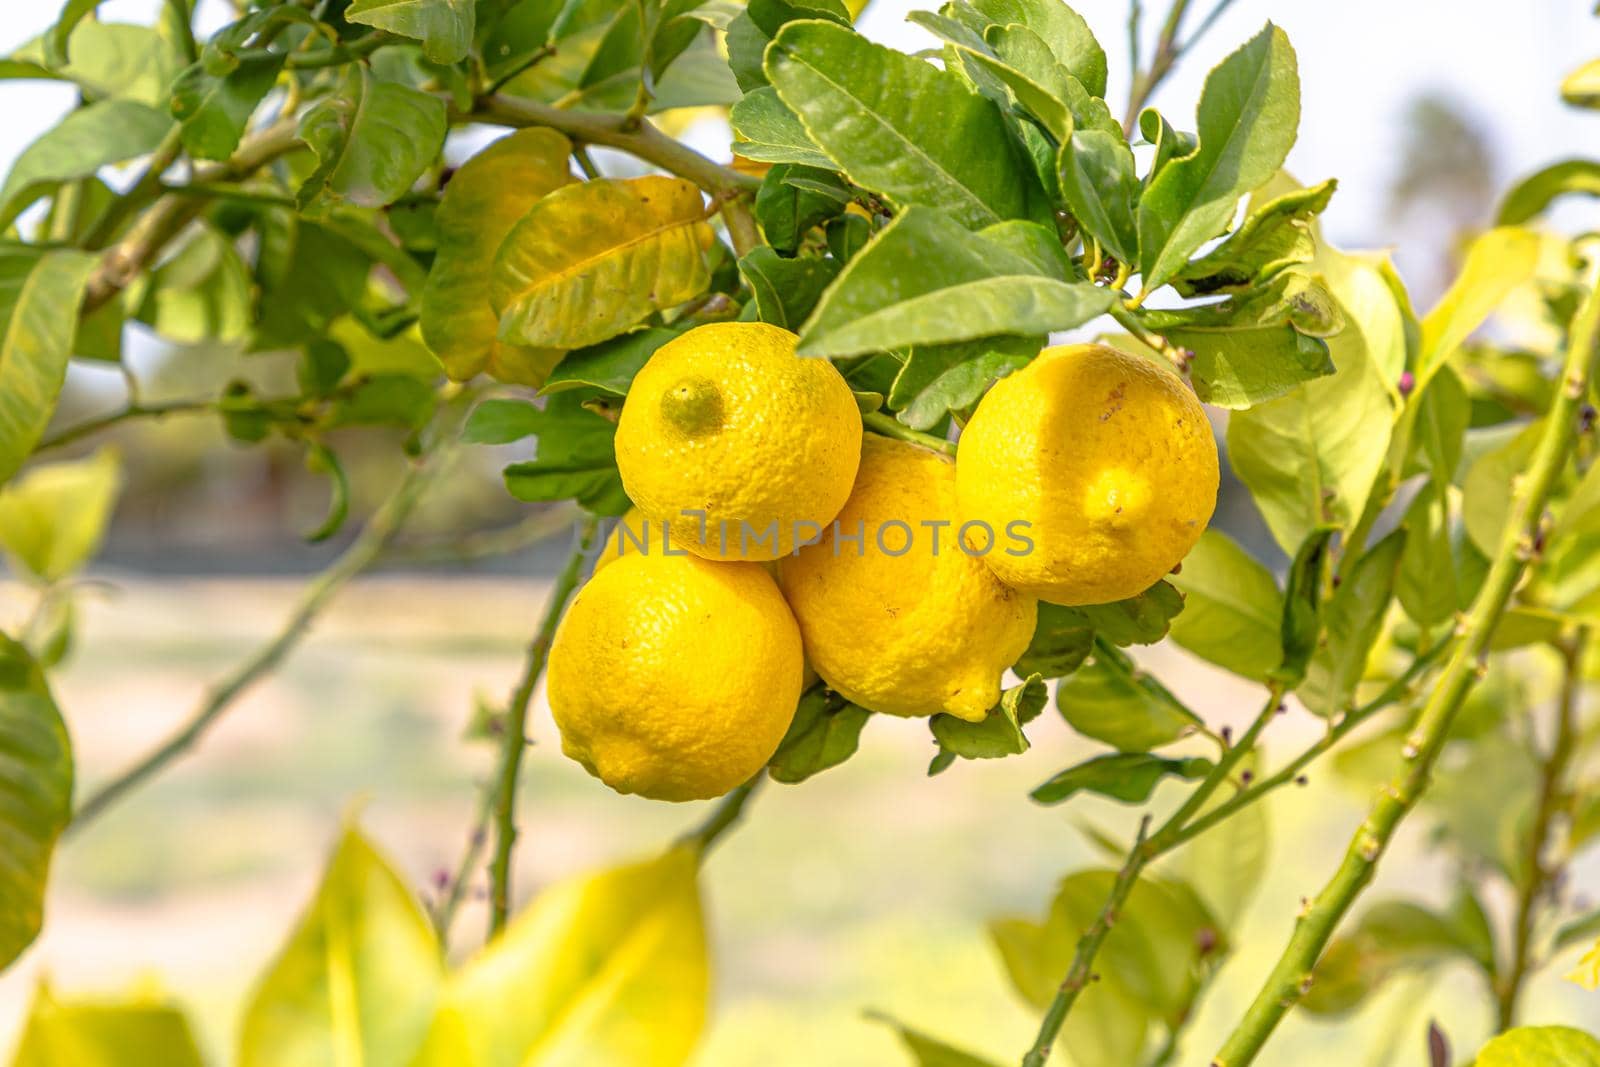 Ripe lemons hanging on a tree. Growing a lemon. Mature lemons on tree. Selective focus and close up.